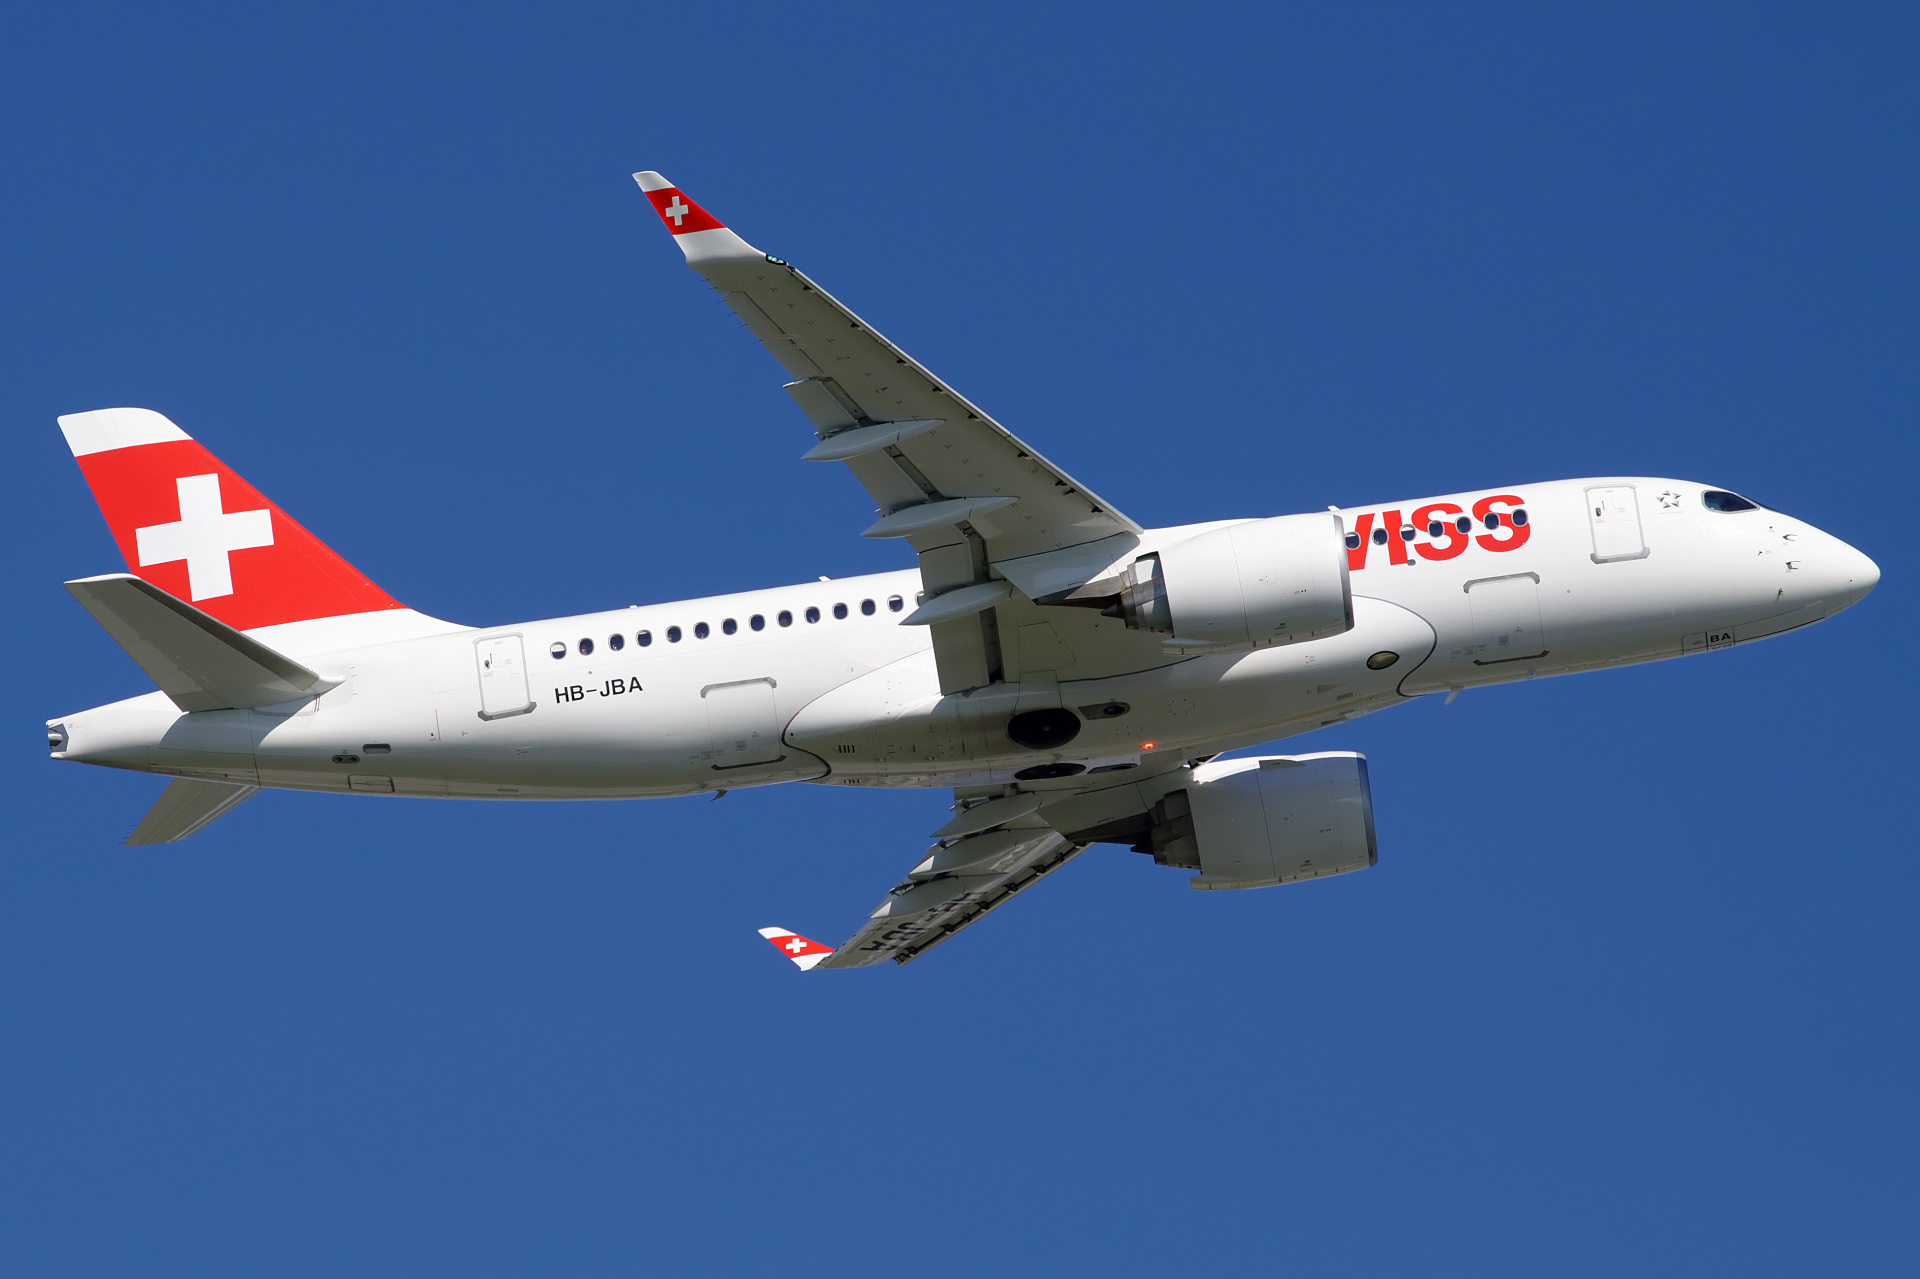 HB-JBA (Aircraft » EPWA Spotting » Airbus A220-100 » Swiss International Air Lines)